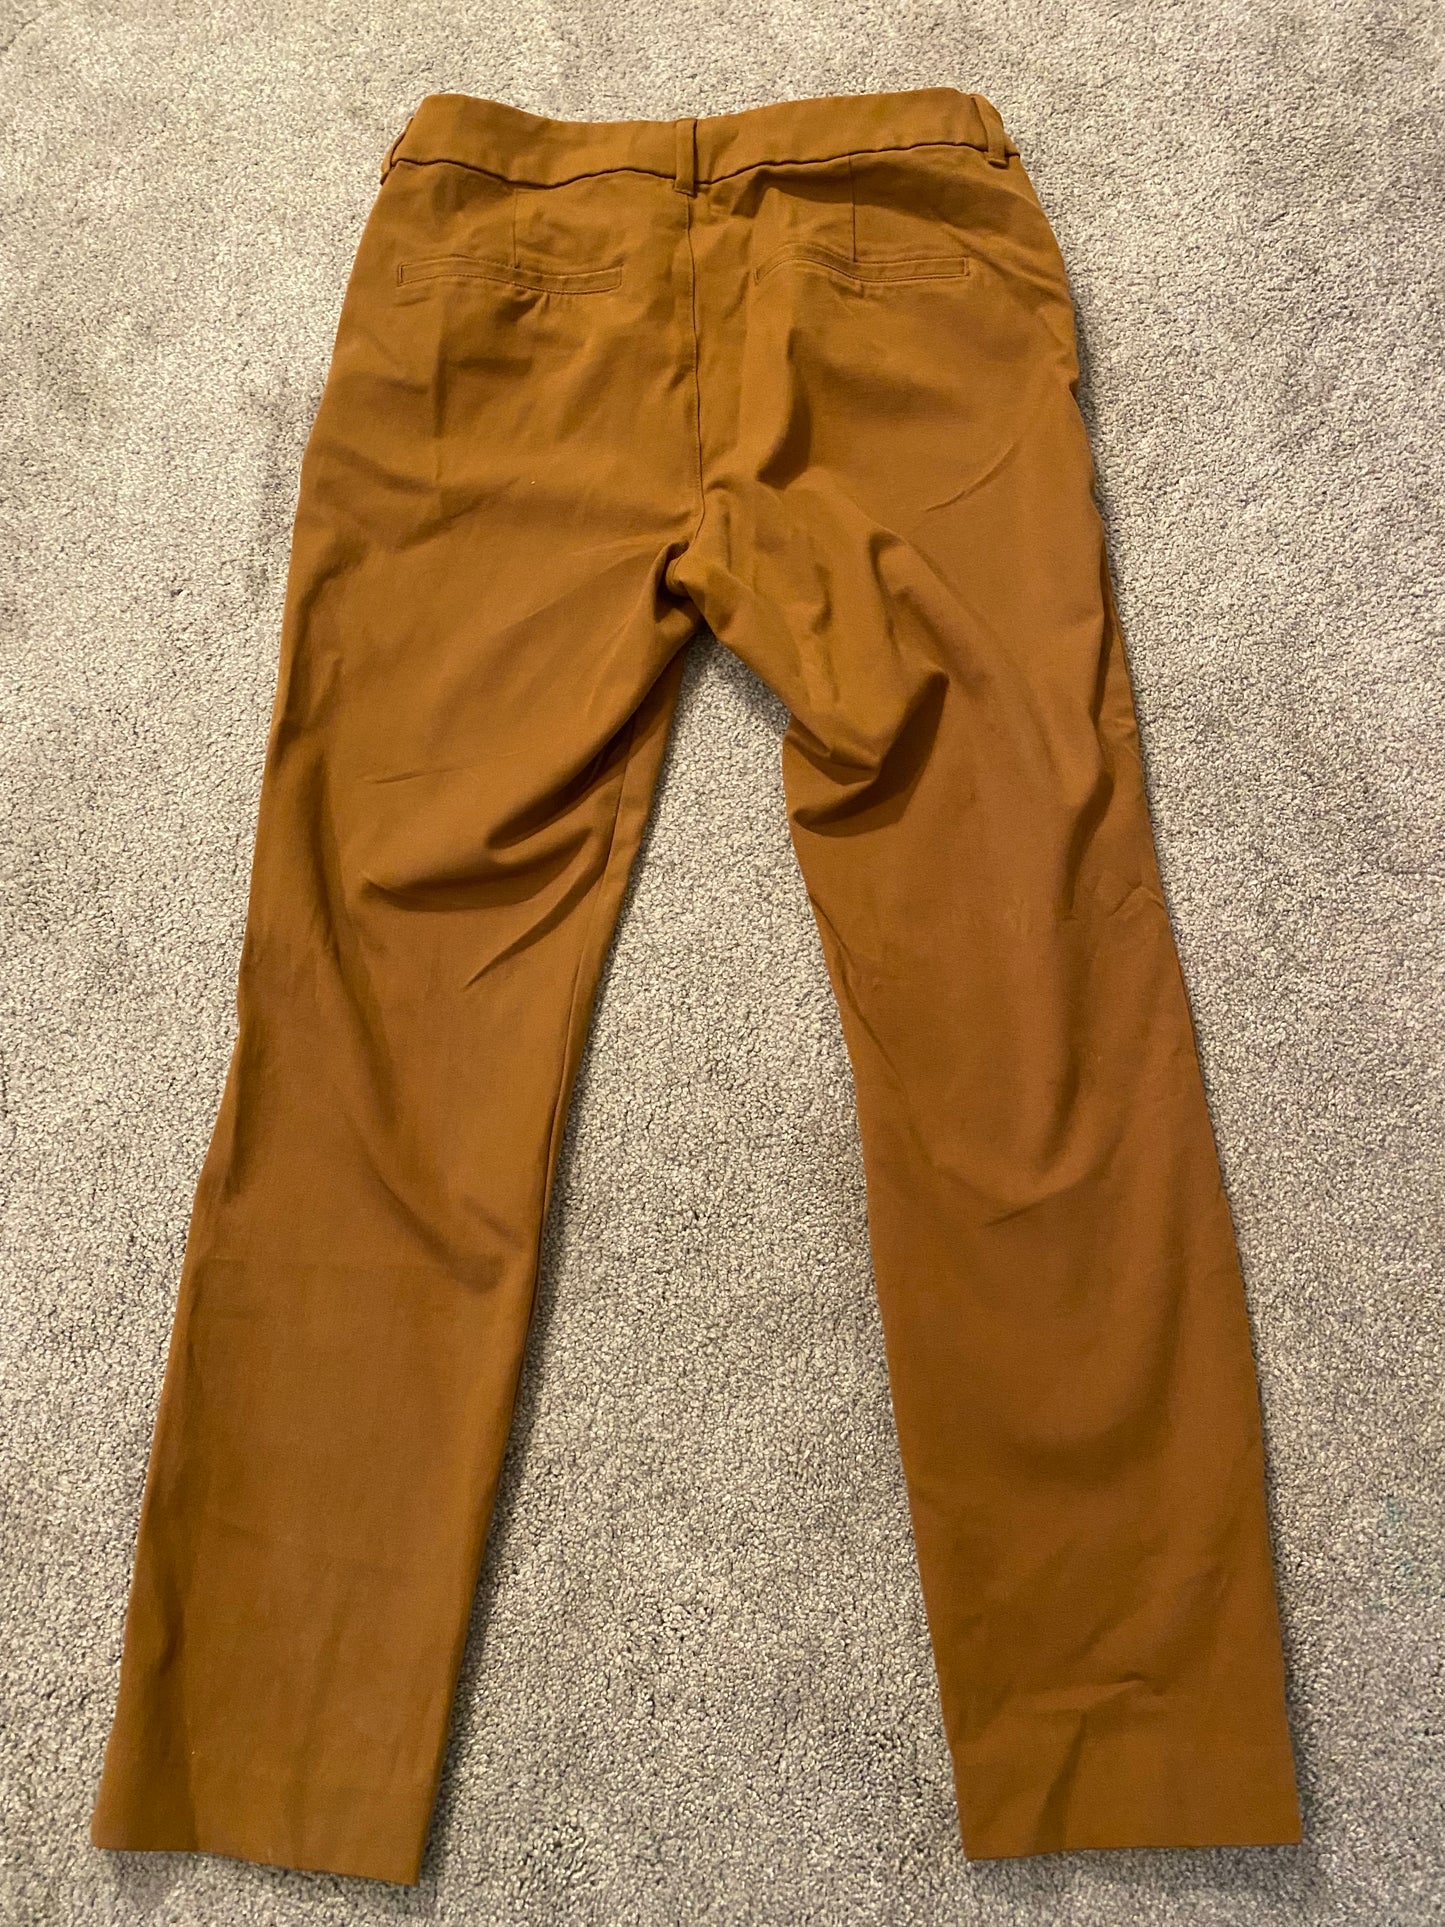 Old Navy Pixie Pants Size 8